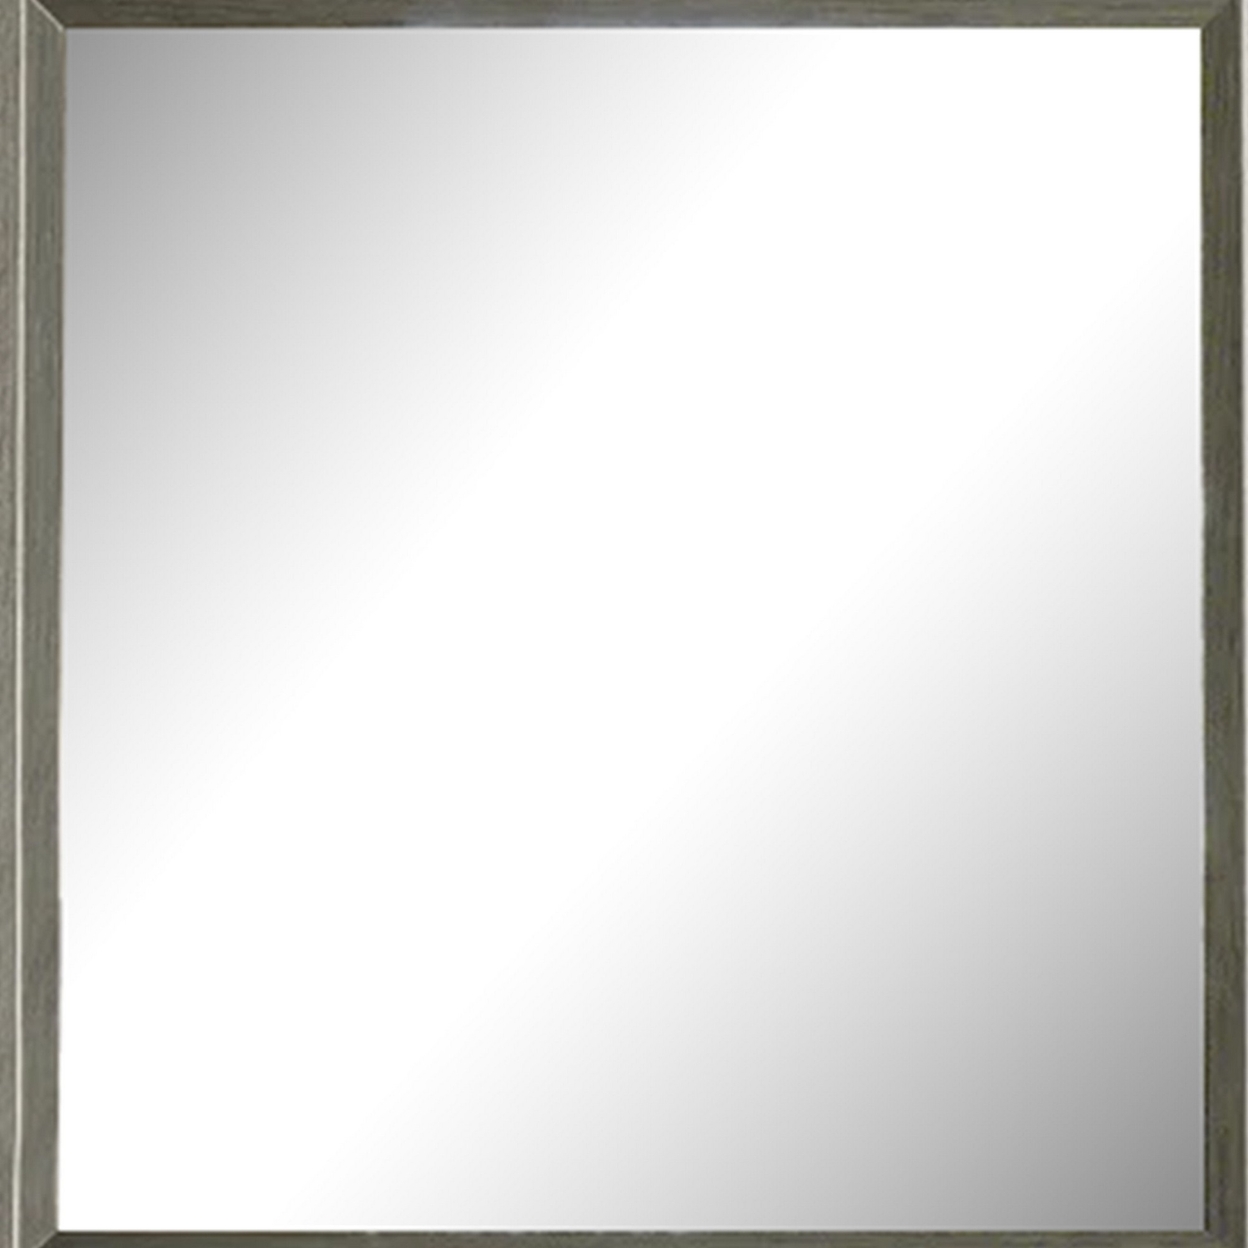 Cid Mizo 42 Inch Mirror, Portrait Orientation, Smooth Gray Solid Wood Frame- Saltoro Sherpi